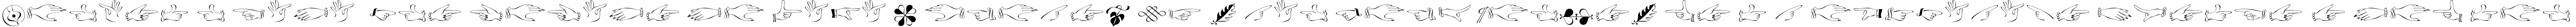 Пример написания шрифтом Zapfino Extra LT Ornaments текста на испанском